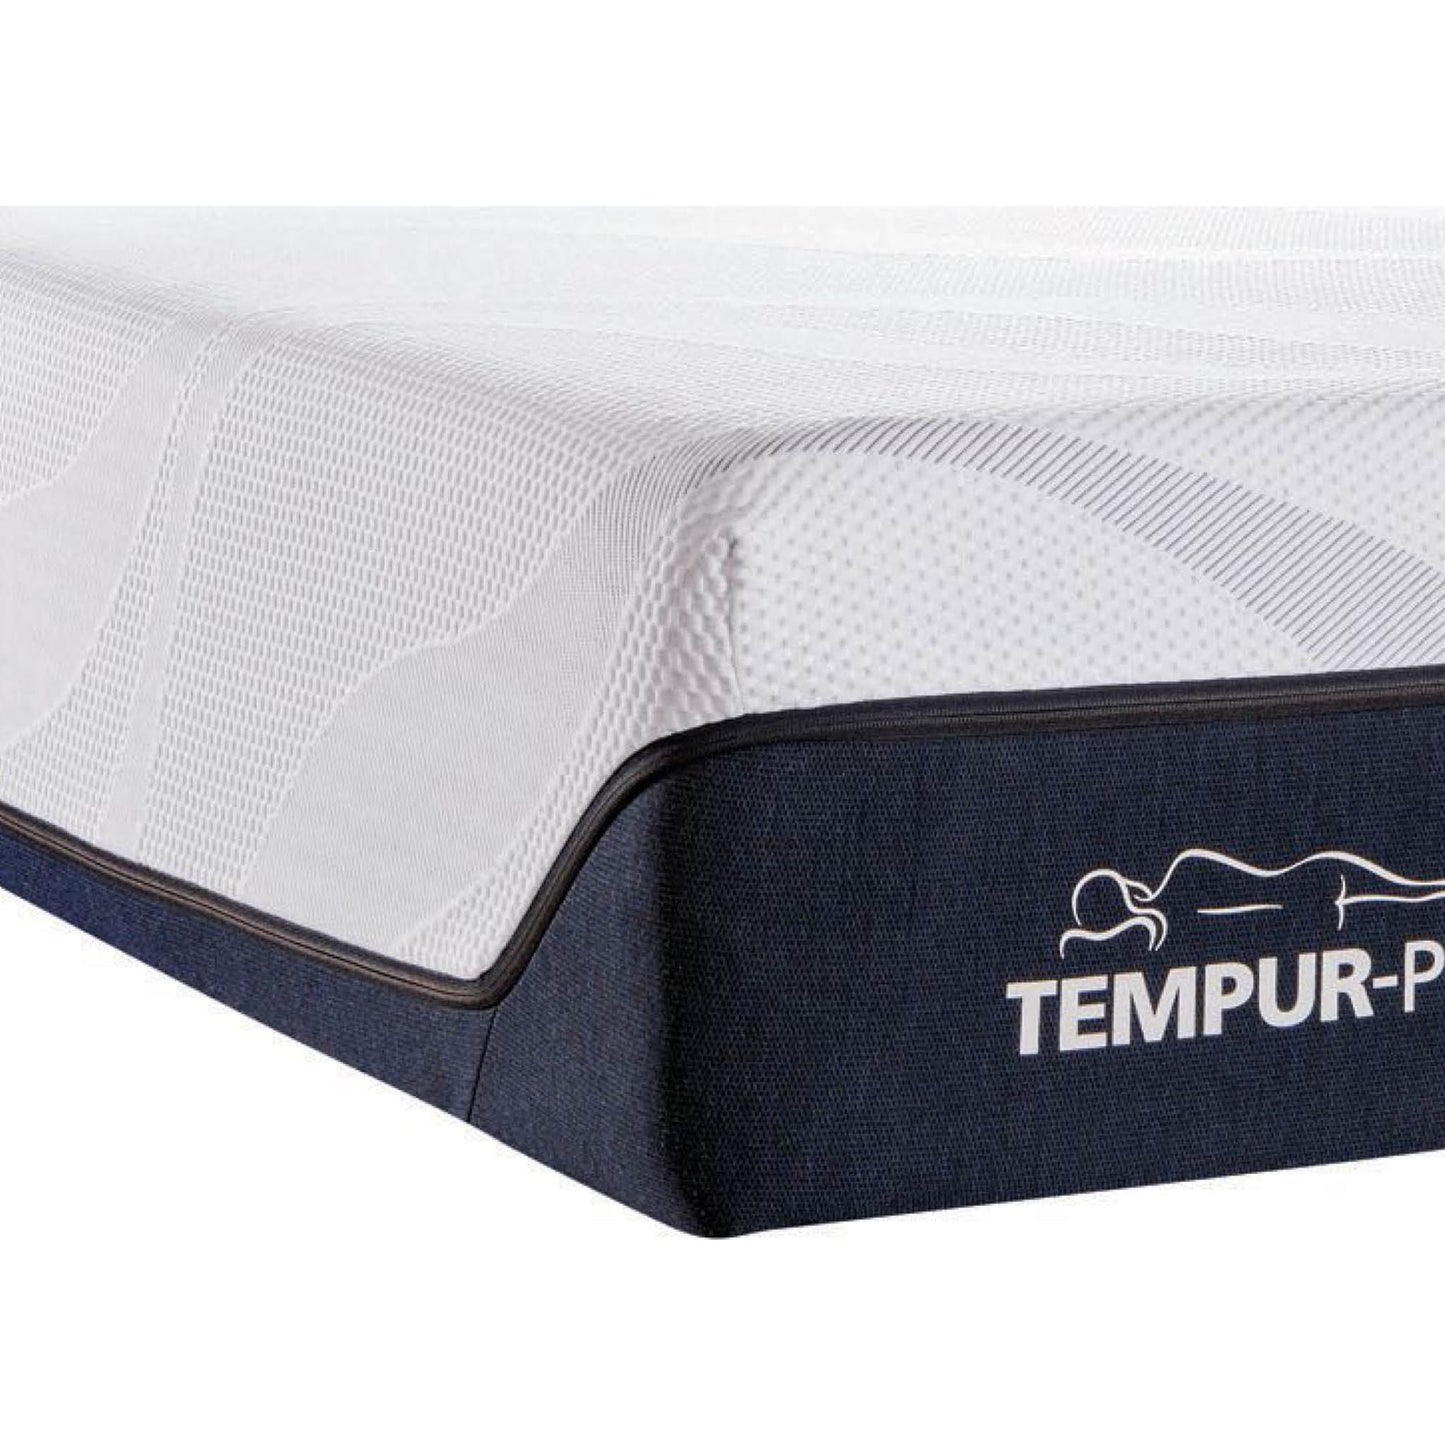 Tempur-Pedic Tempur-Luxe Align Firm Memory Foam 13 inch Mattress